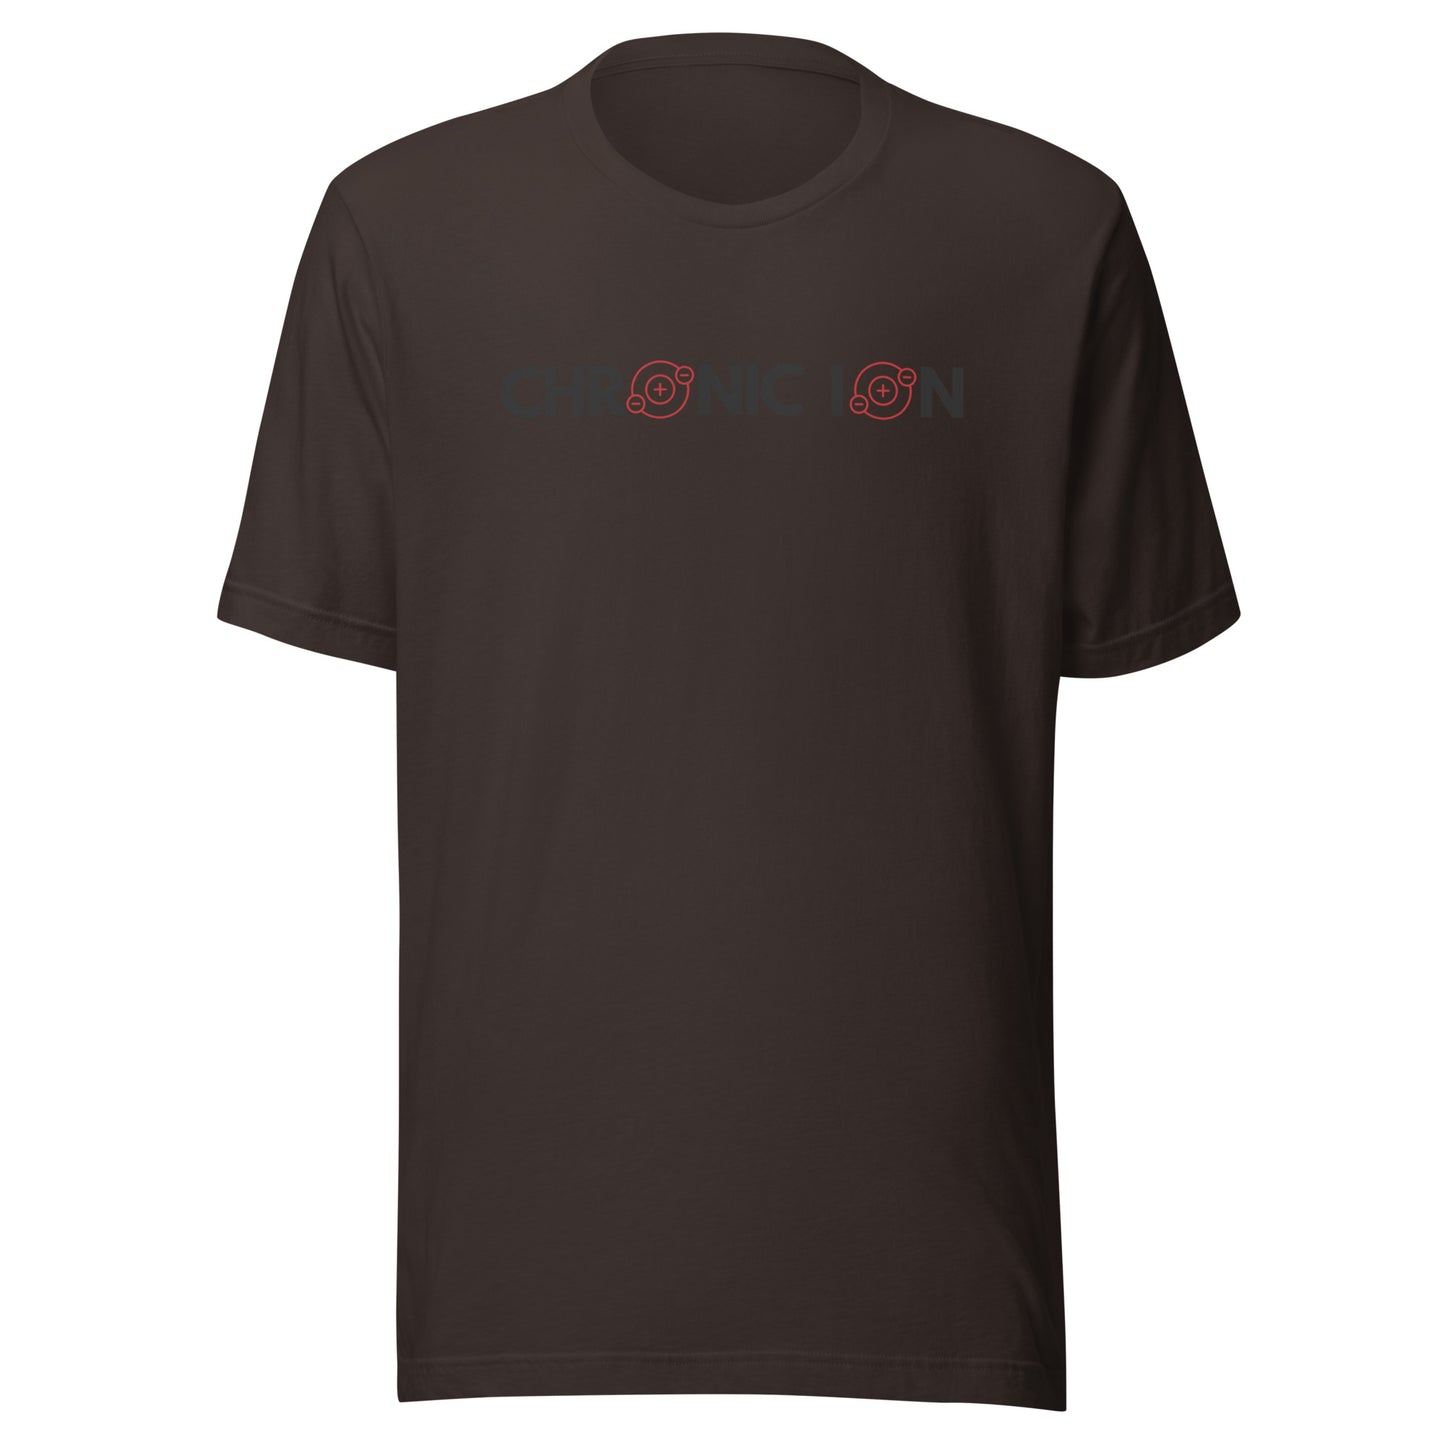 Chronic Ion Logo T-Shirt